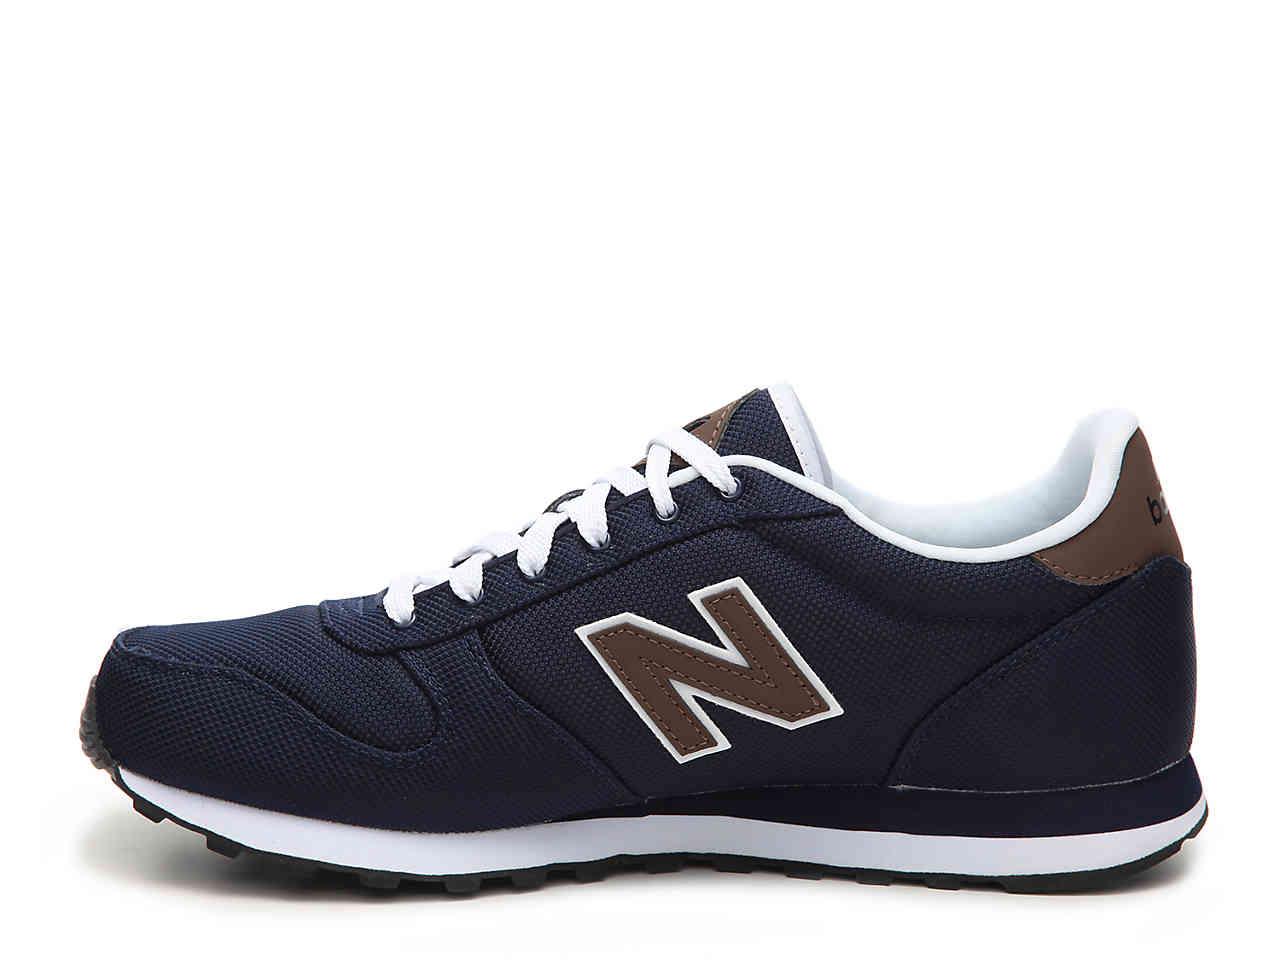 New Balance Rubber 311 Sneaker in Navy (Blue) for Men - Lyst